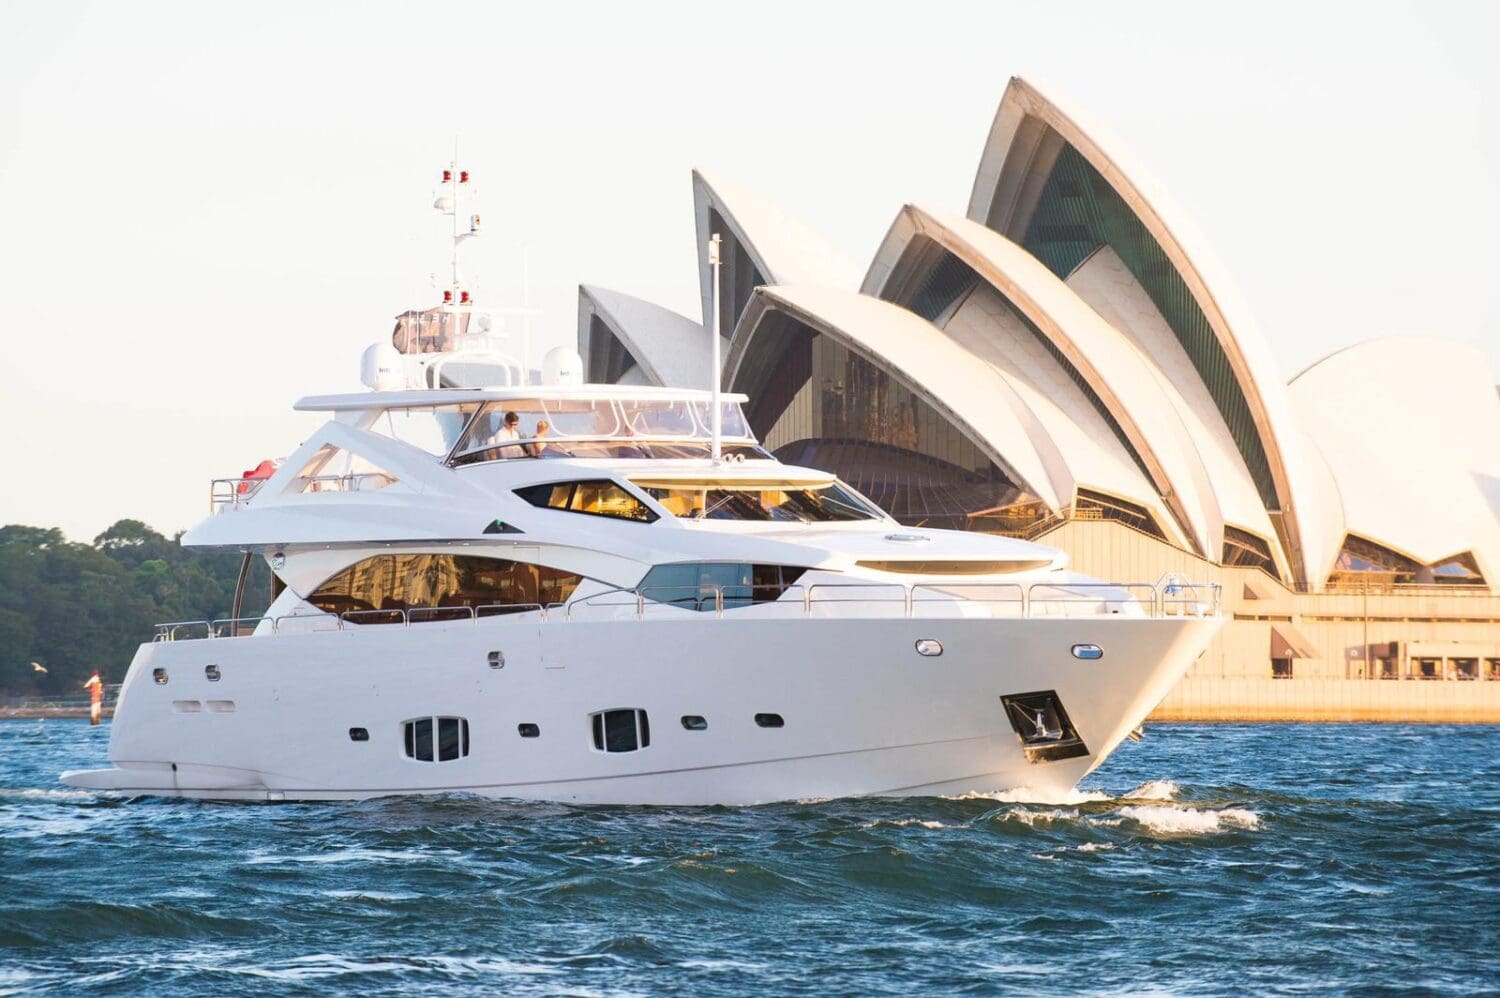 Boat Hire Sydney